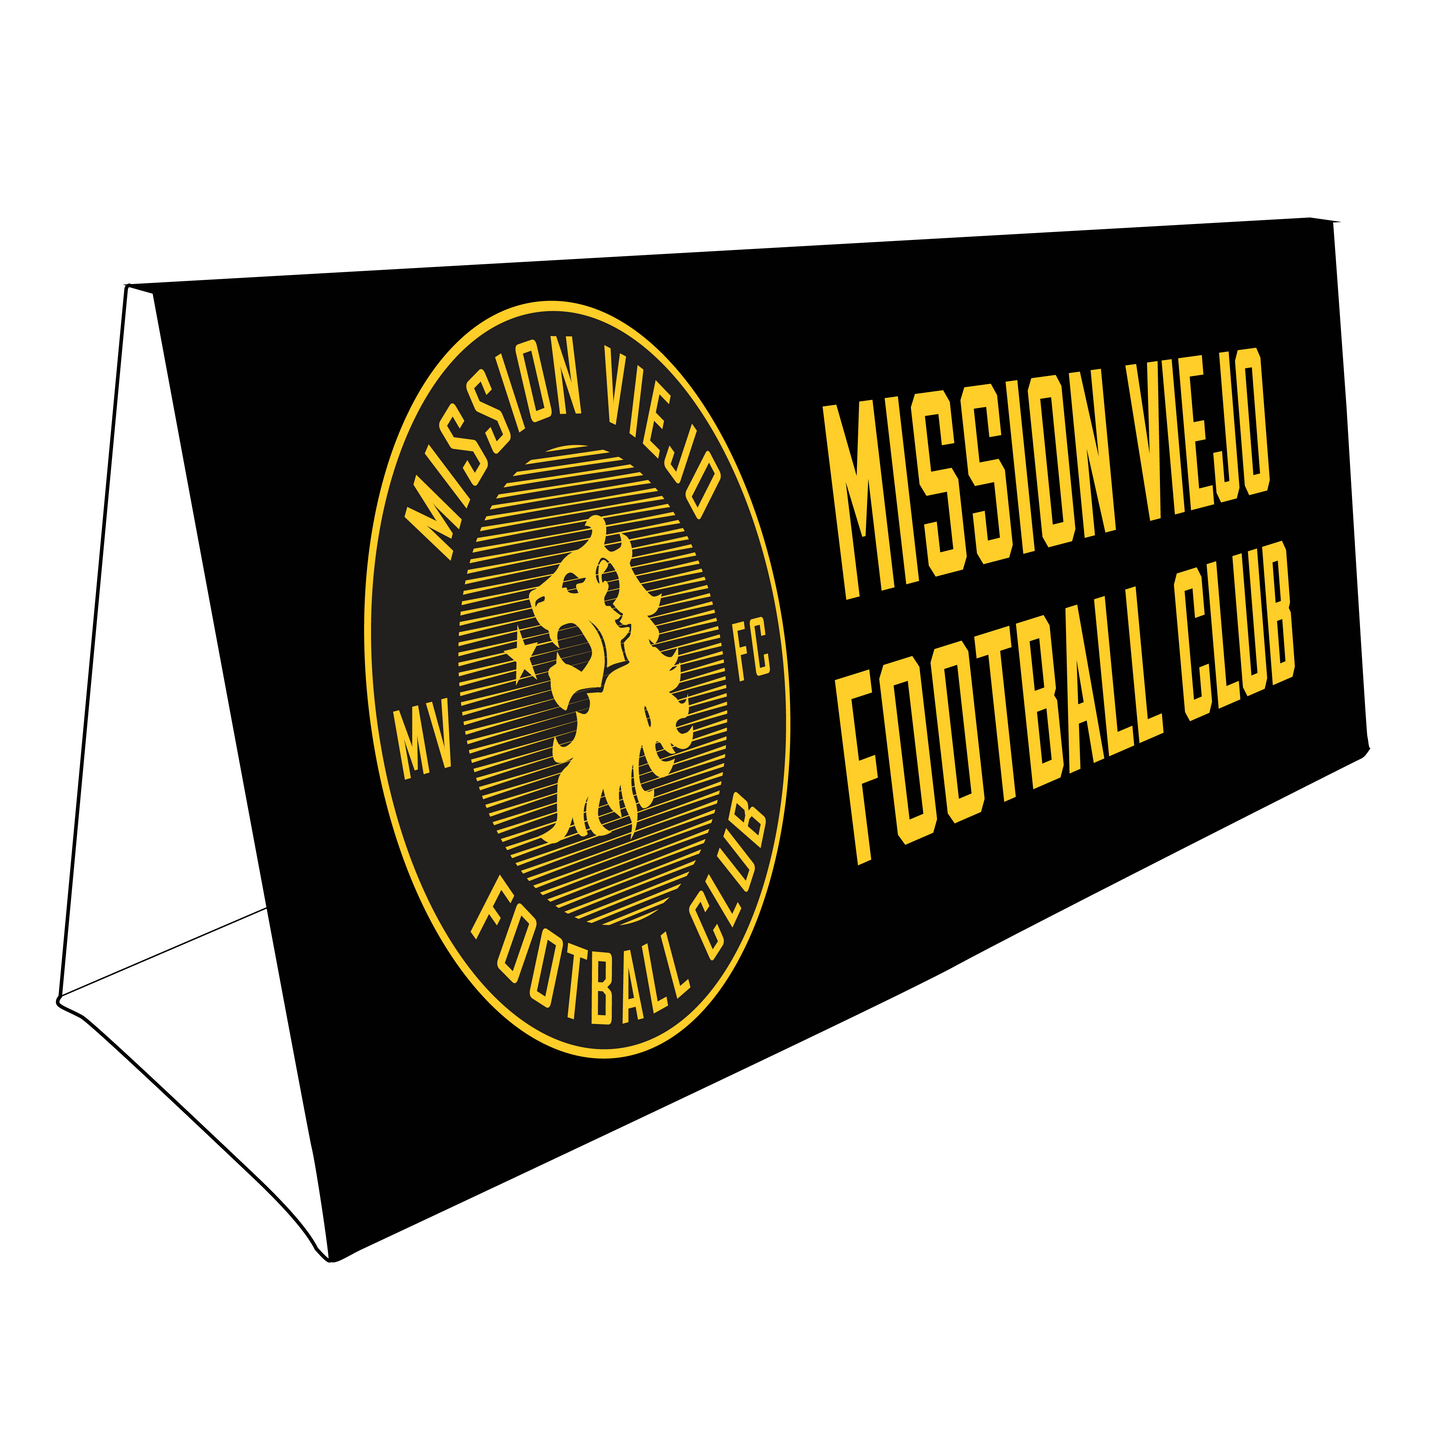 Mission Viejo Football Club A-Frame Field Board (Set of 2)